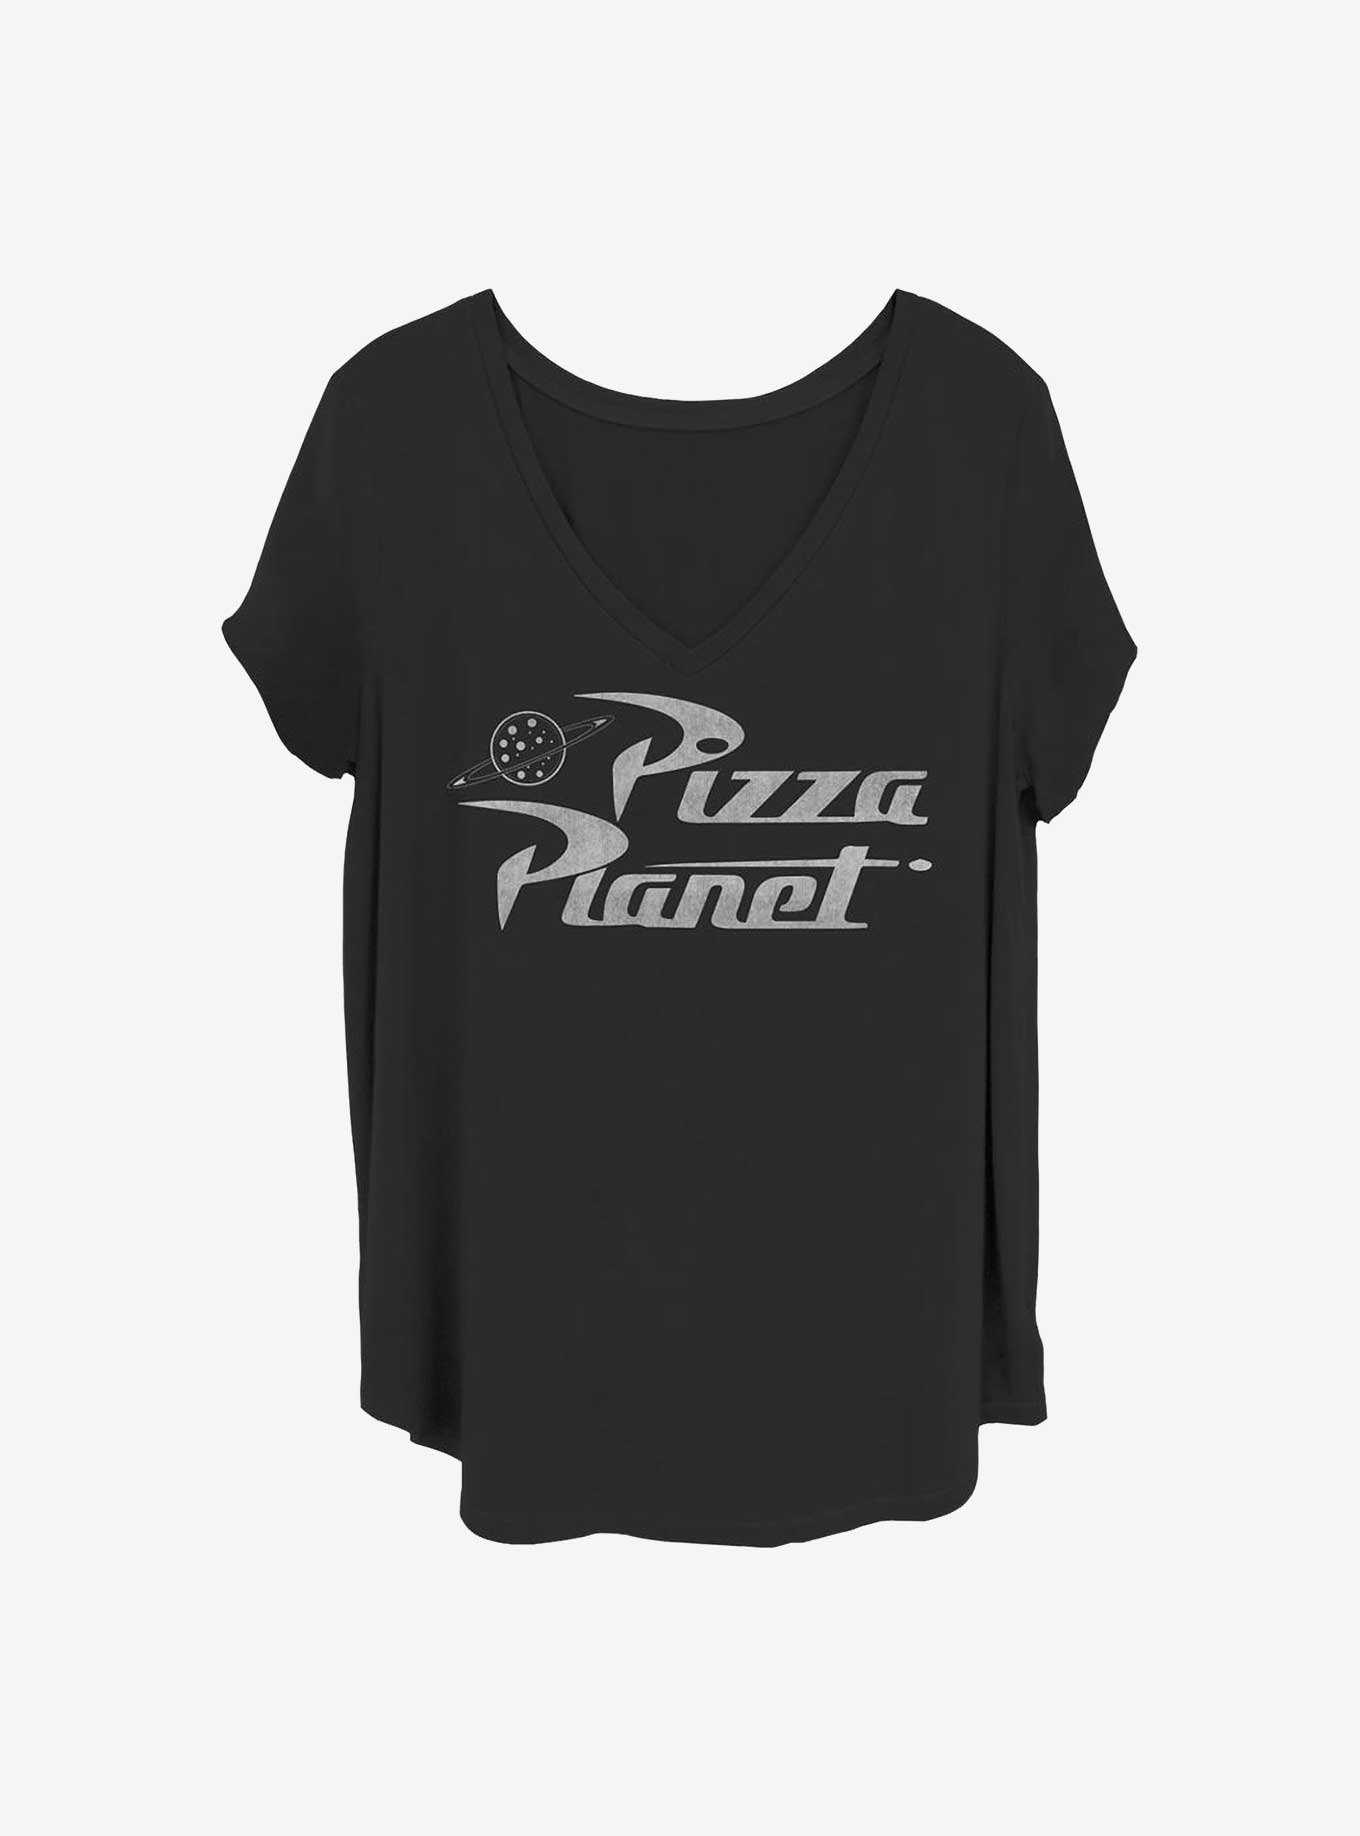 Disney Pixar Toy Story Pizza Planet Girls T-Shirt Plus Size, , hi-res